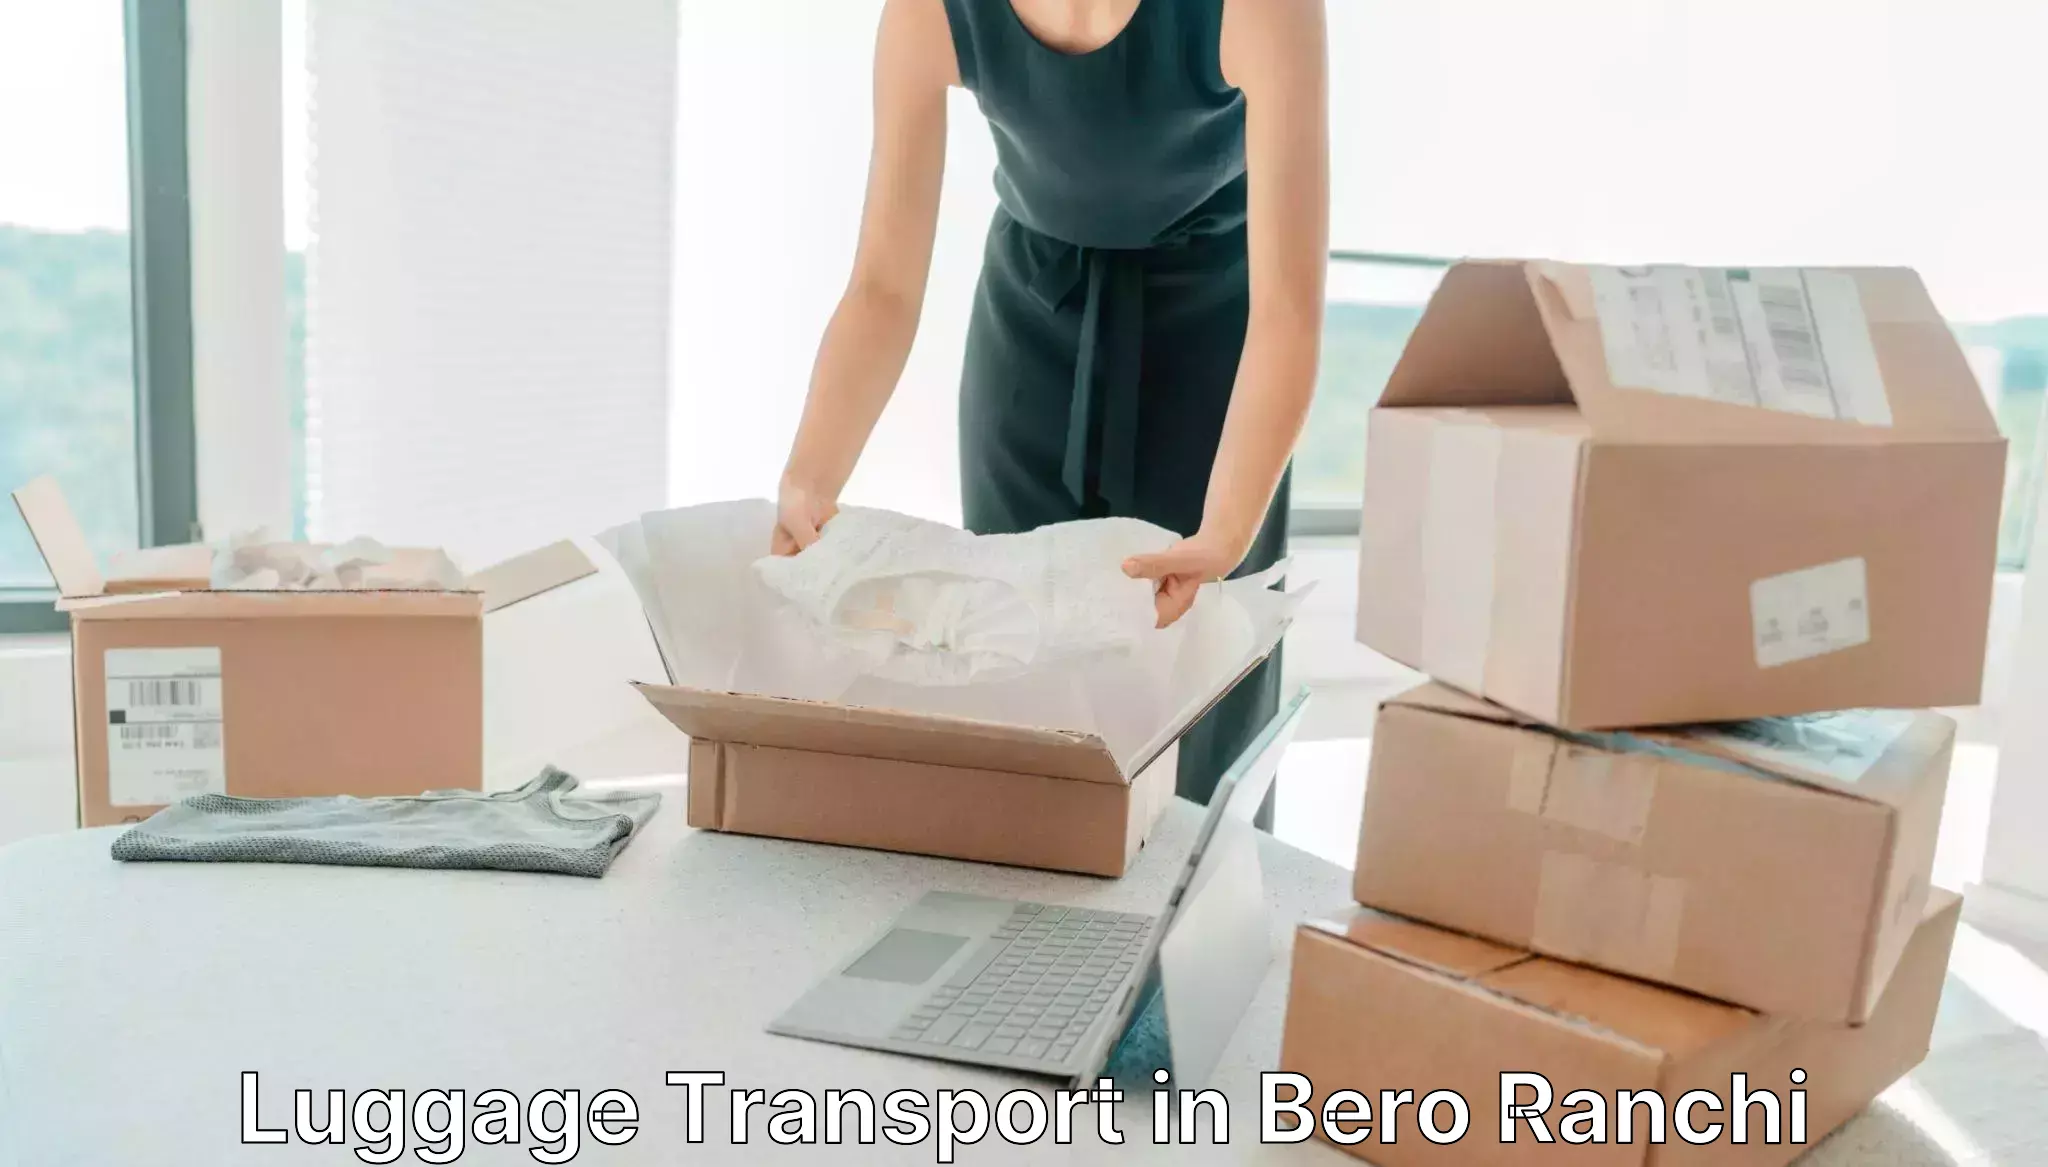 Luggage delivery optimization in Bero Ranchi